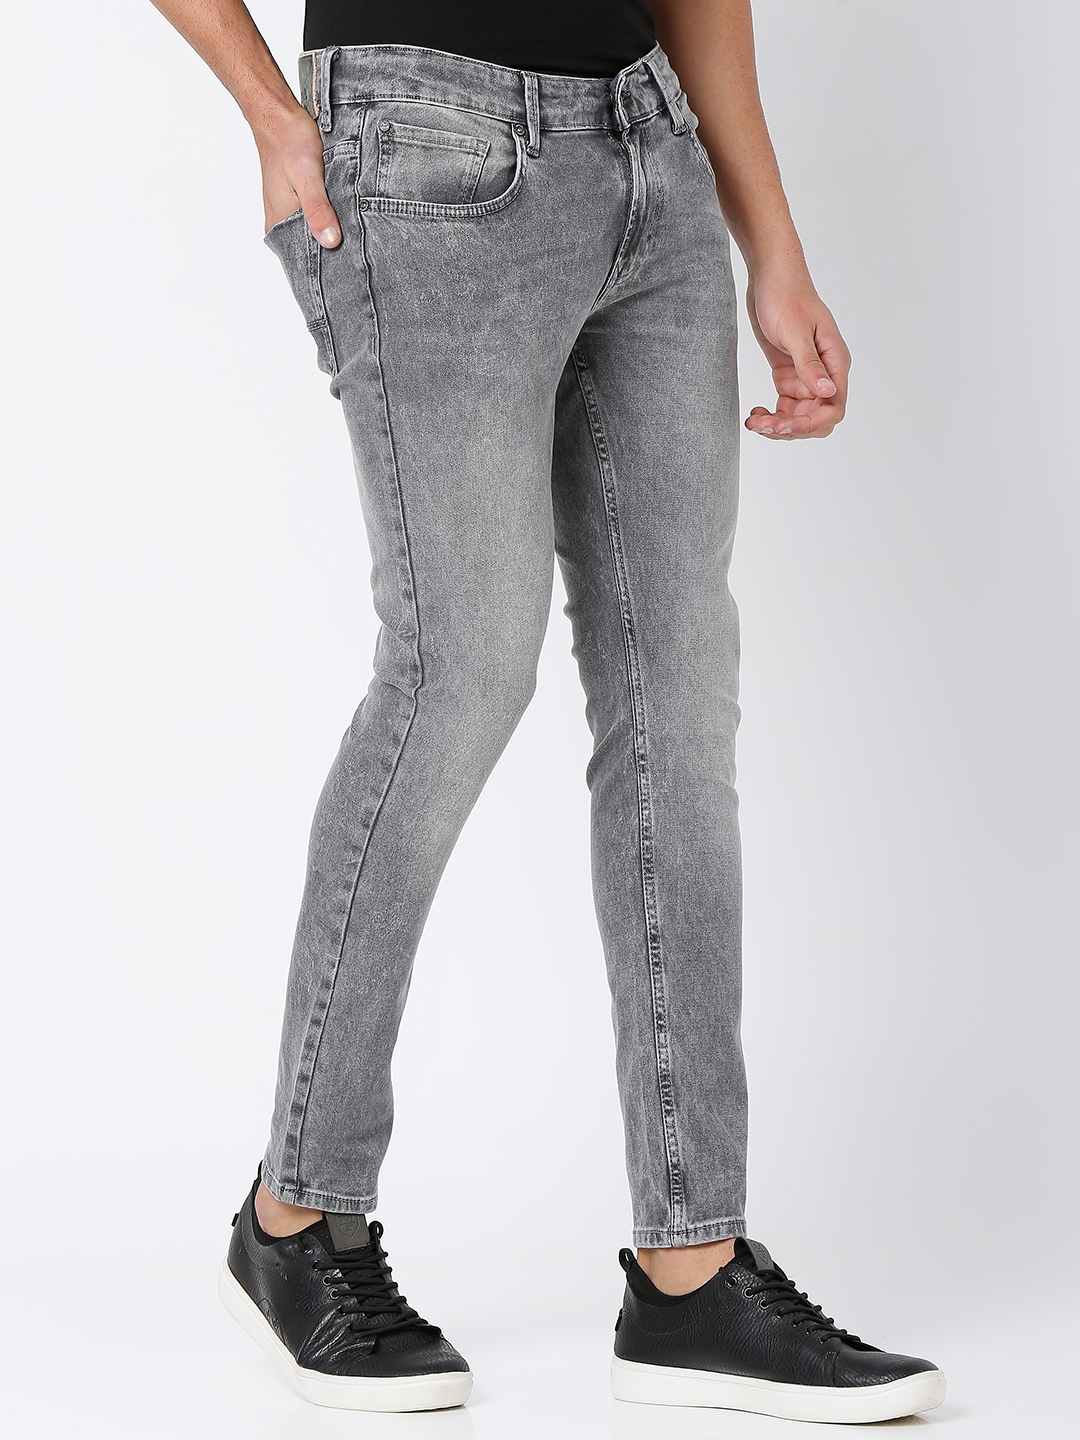 spykar | Men's Grey Cotton Solid Jeans 2